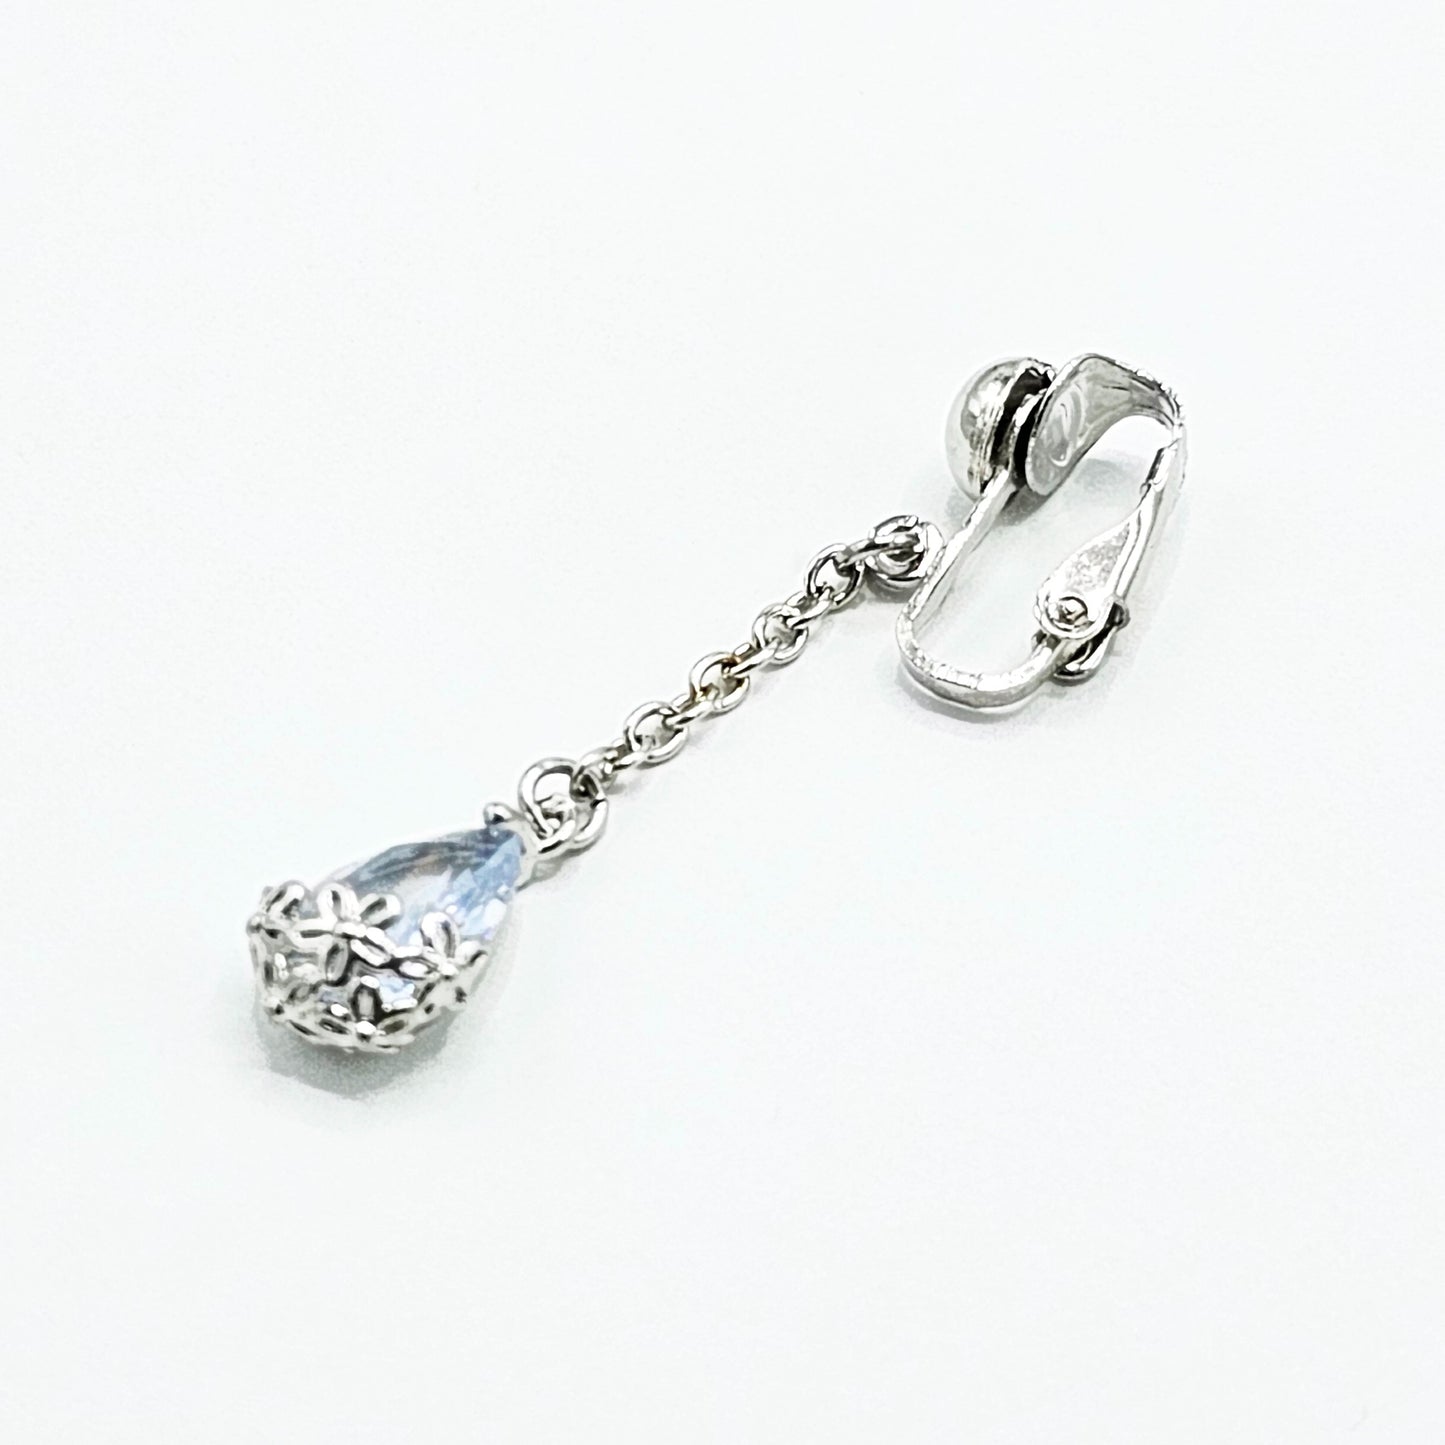 Non Piercing Vaginal Jewelry Clip with Cubic Zirconia Chain Dangle. VCH Clip, Clitoral Jewelry